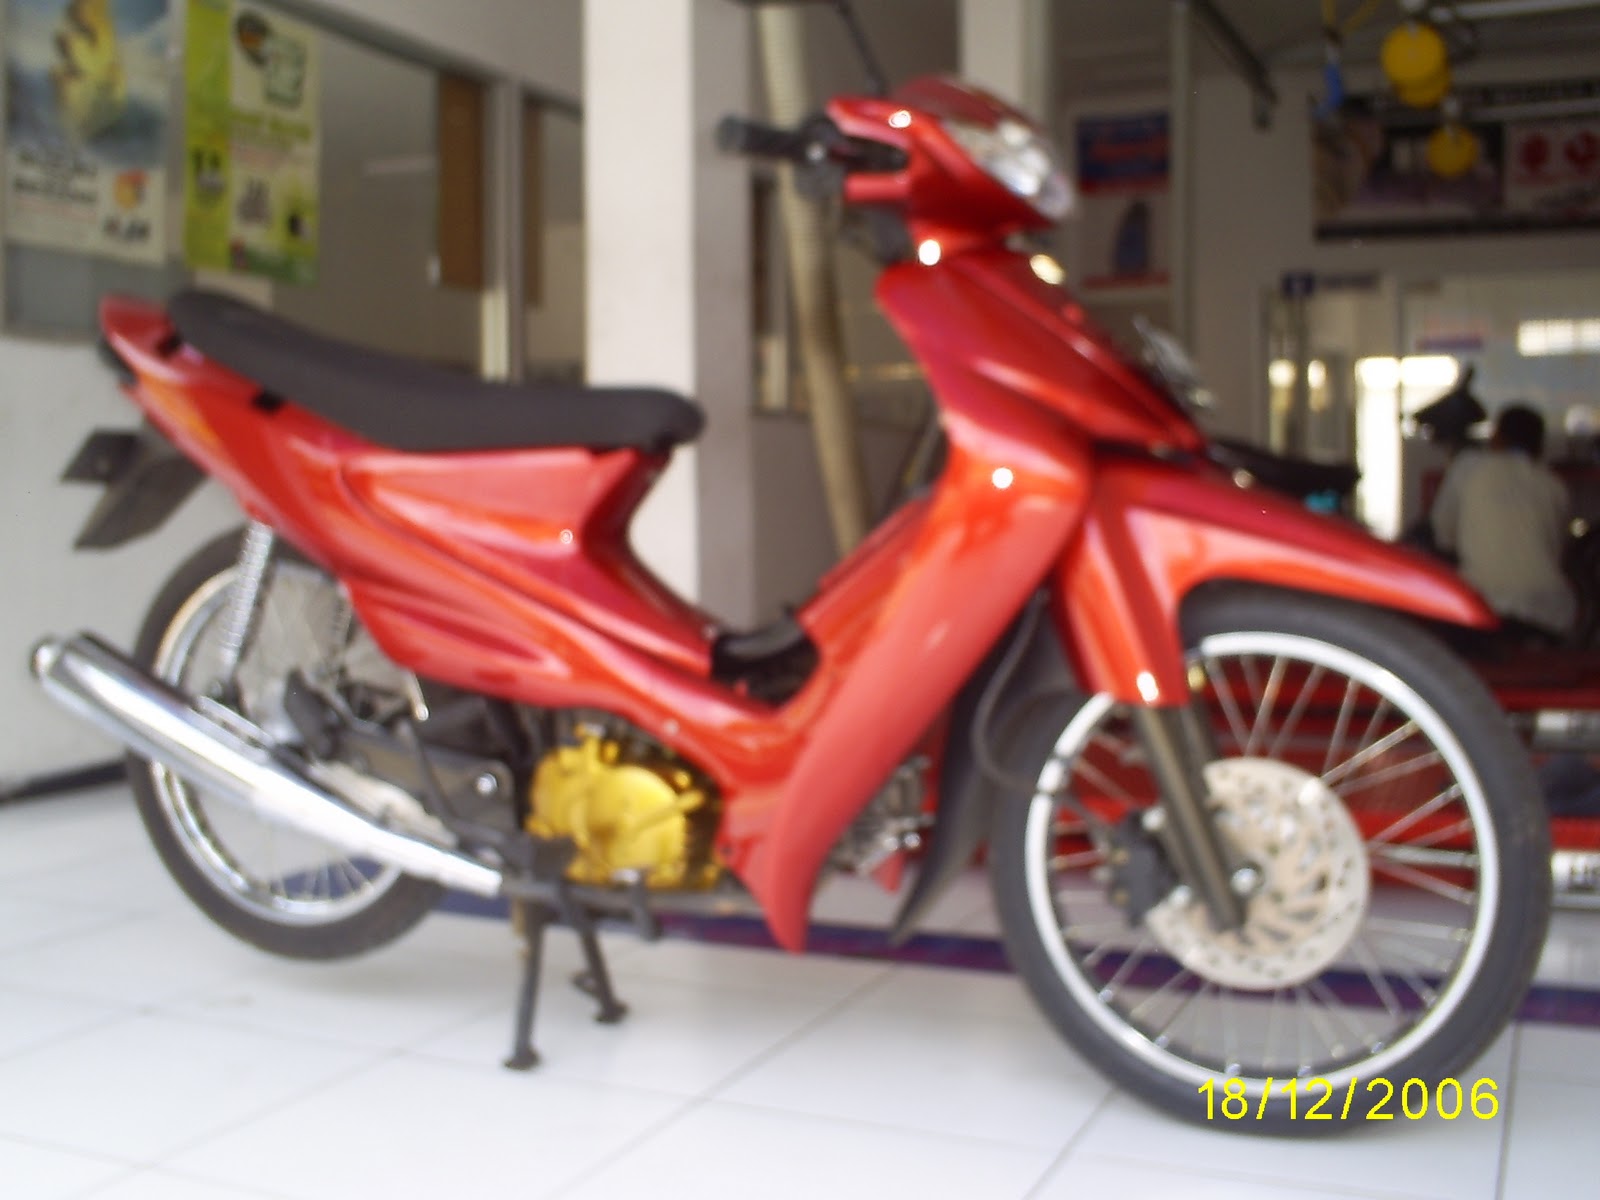 Best Motorcycle Suzuki Smash 2006 Suzuki Motorcycle Modification